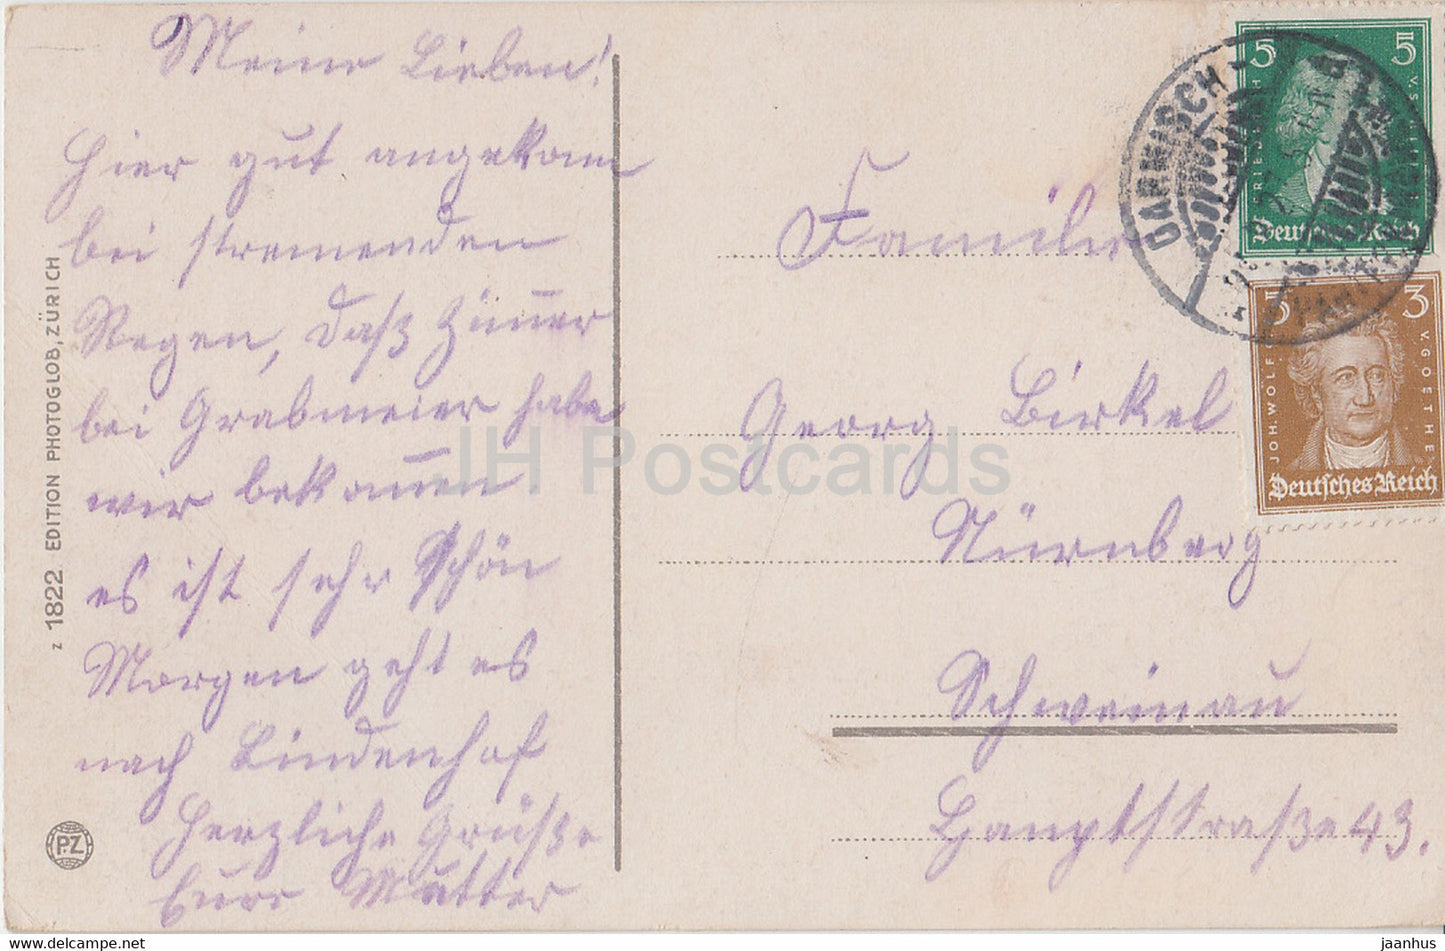 Partenkirchen mit Zugspitze - 1822 - old postcard - Germany - used